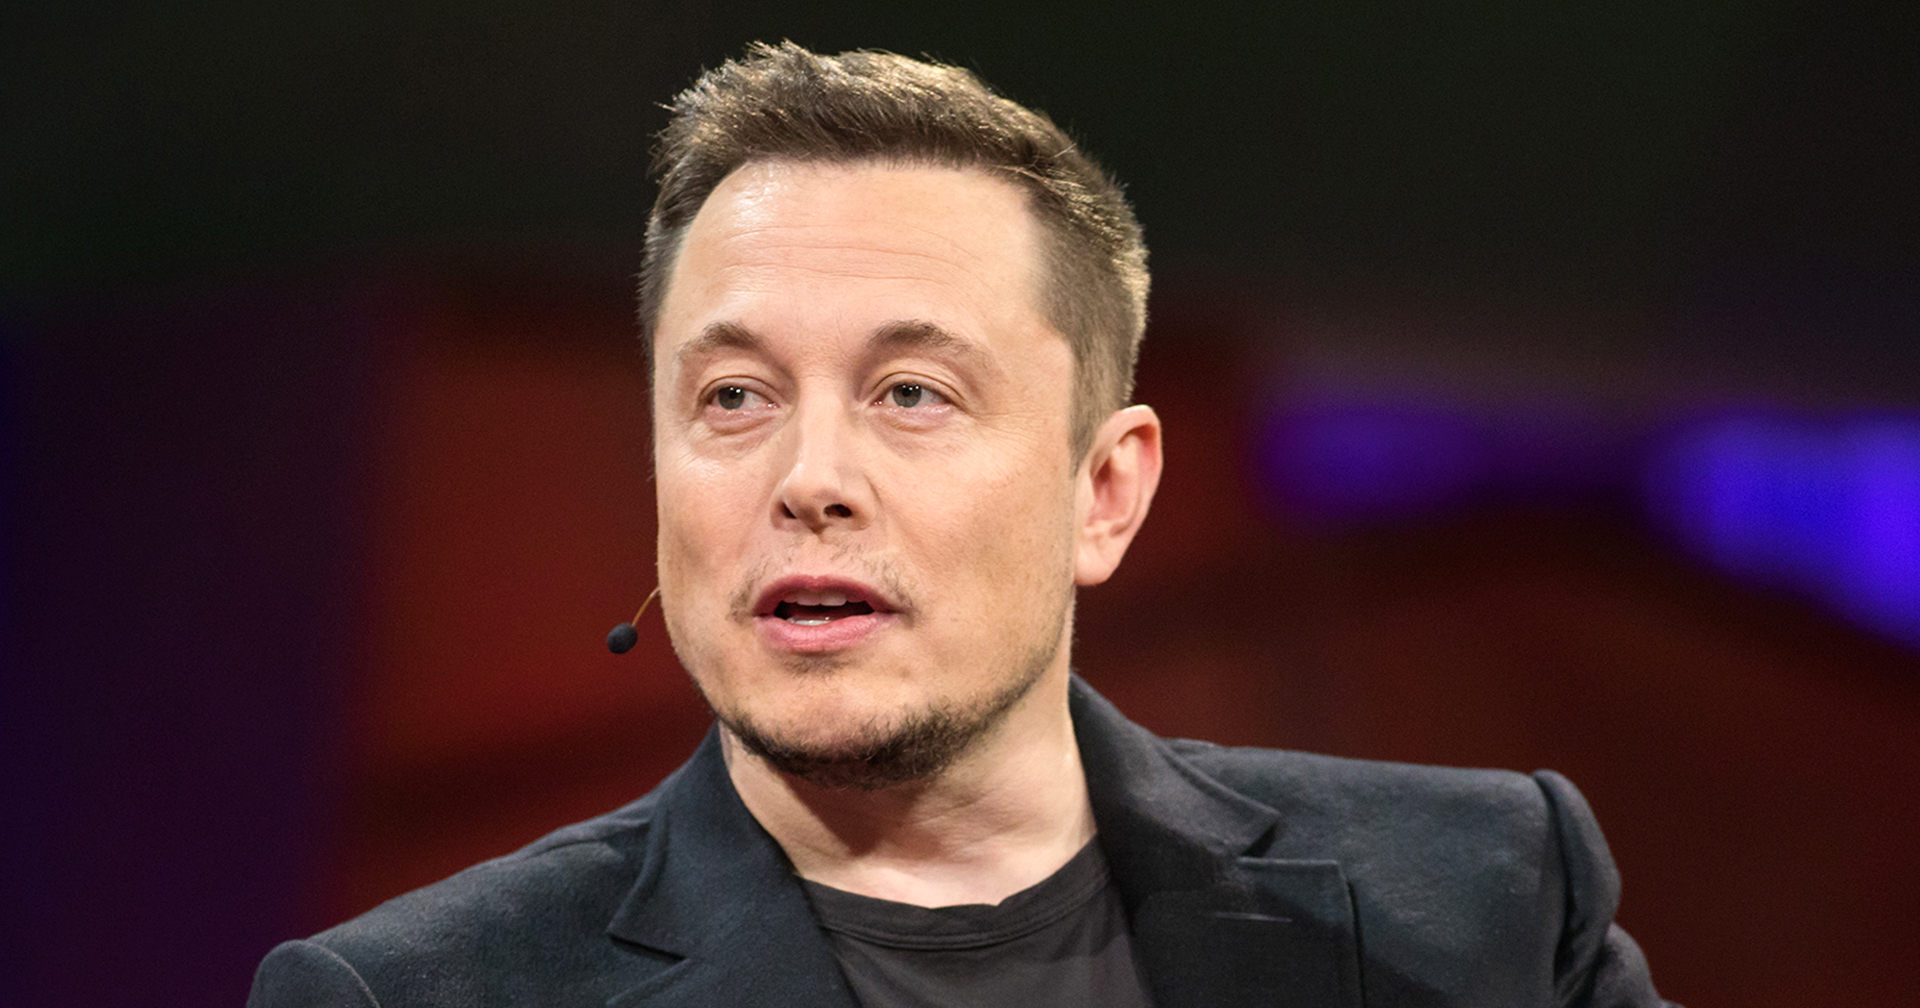 Elon Musk และ Bill Ackman เรียกร้องให้ธนาคารกลางสหรัฐฯ หยุดปรับขึ้นอัตราดอกเบี้ยชั่วคราว